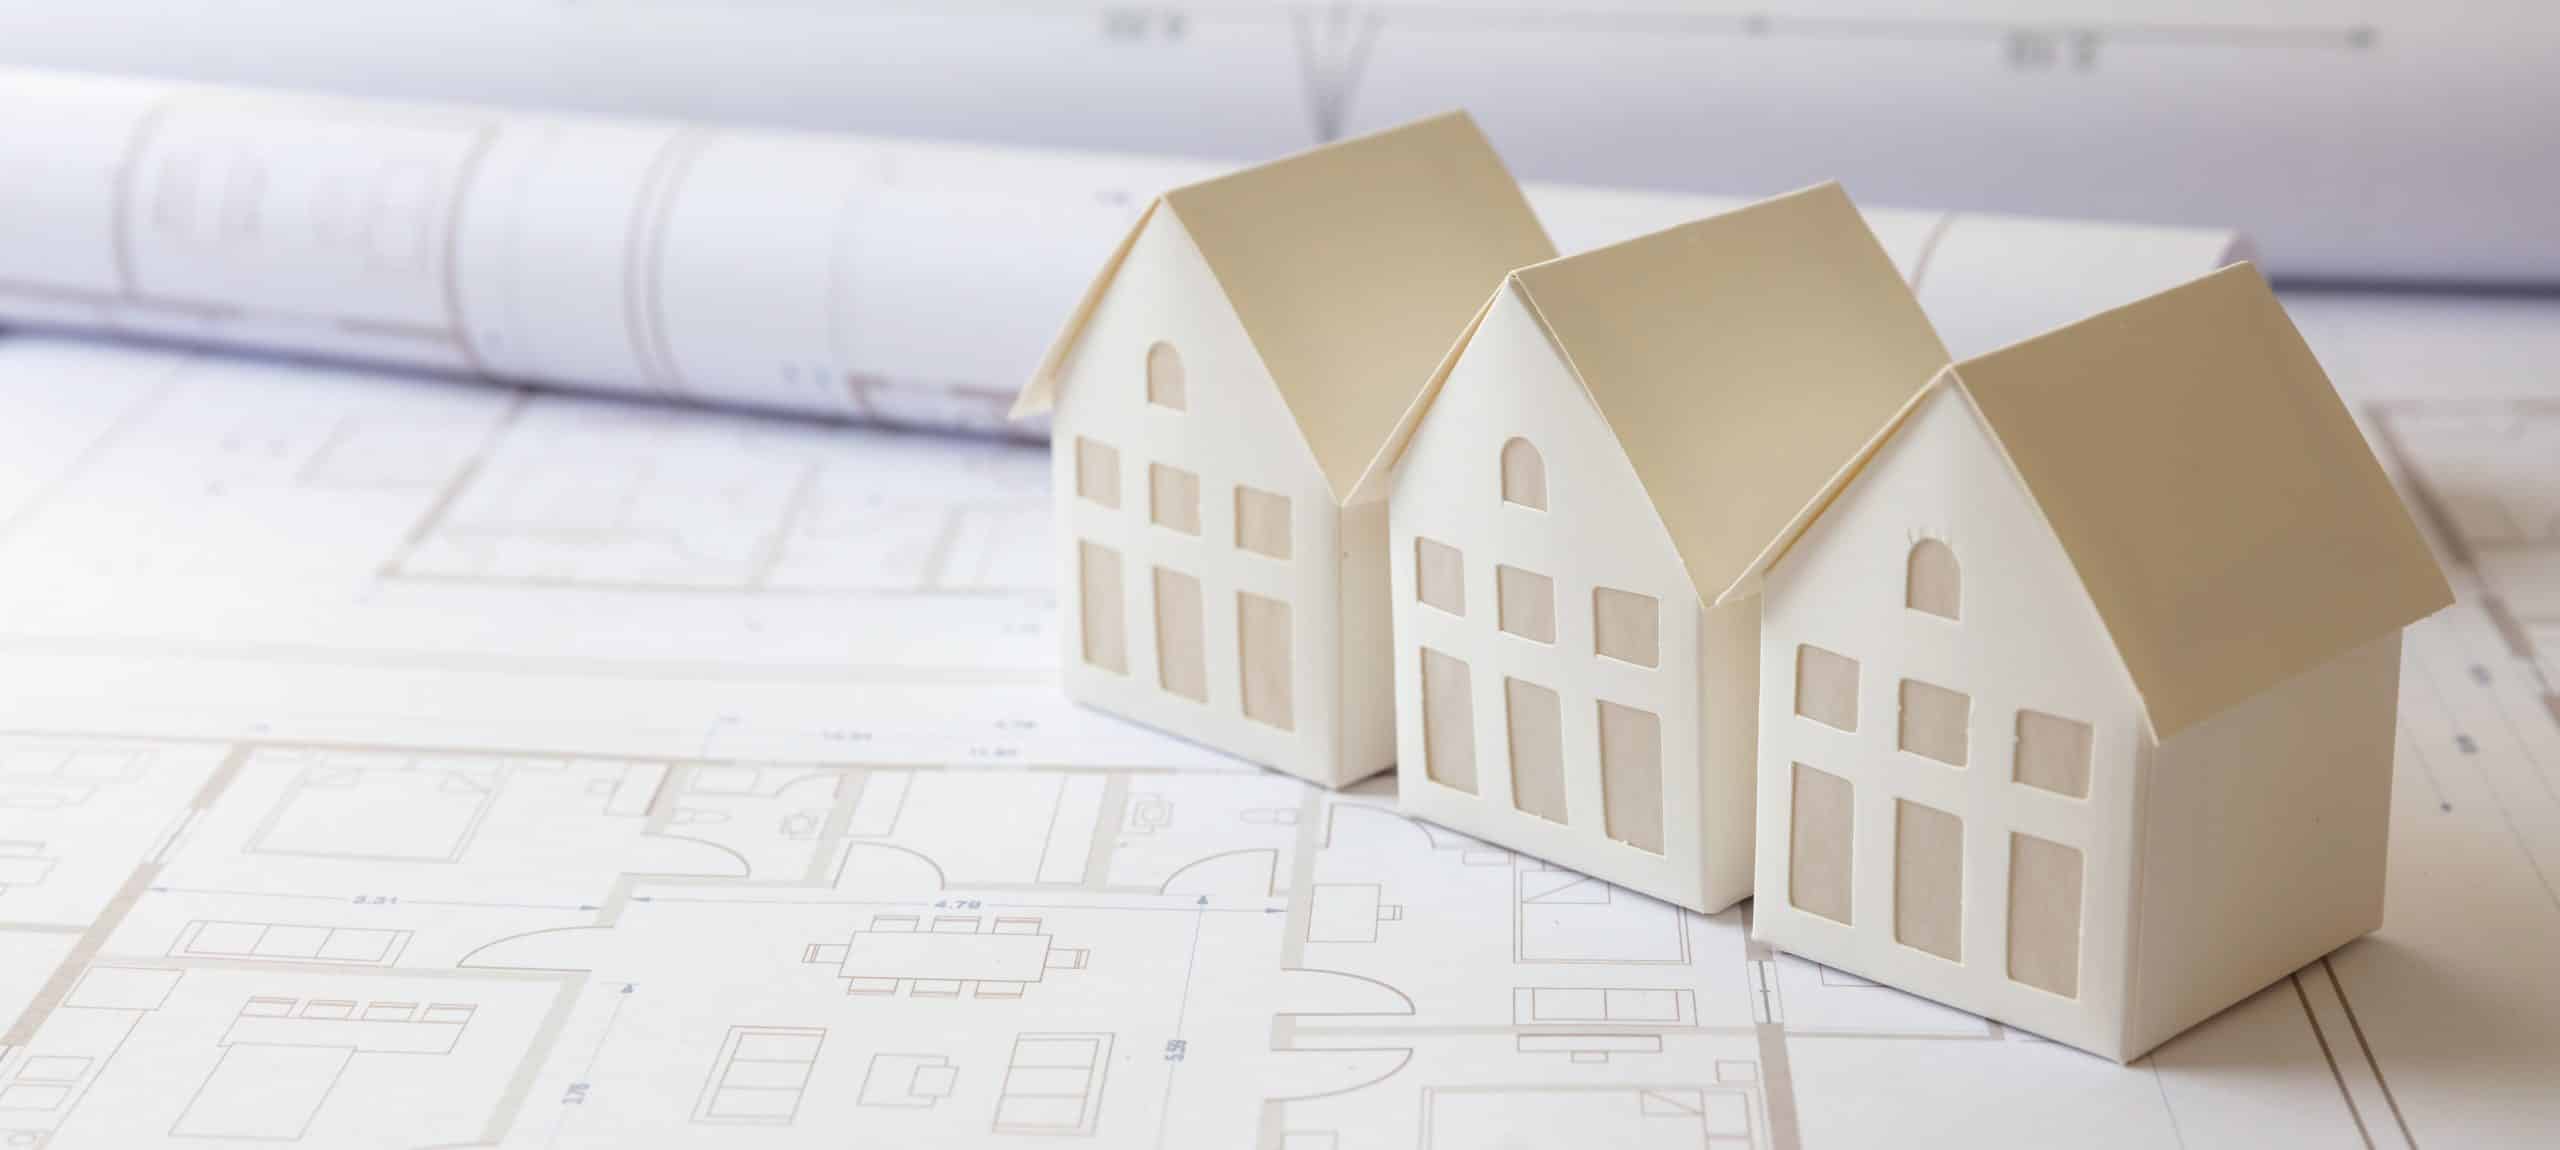 Construction concept, models house and blueprints